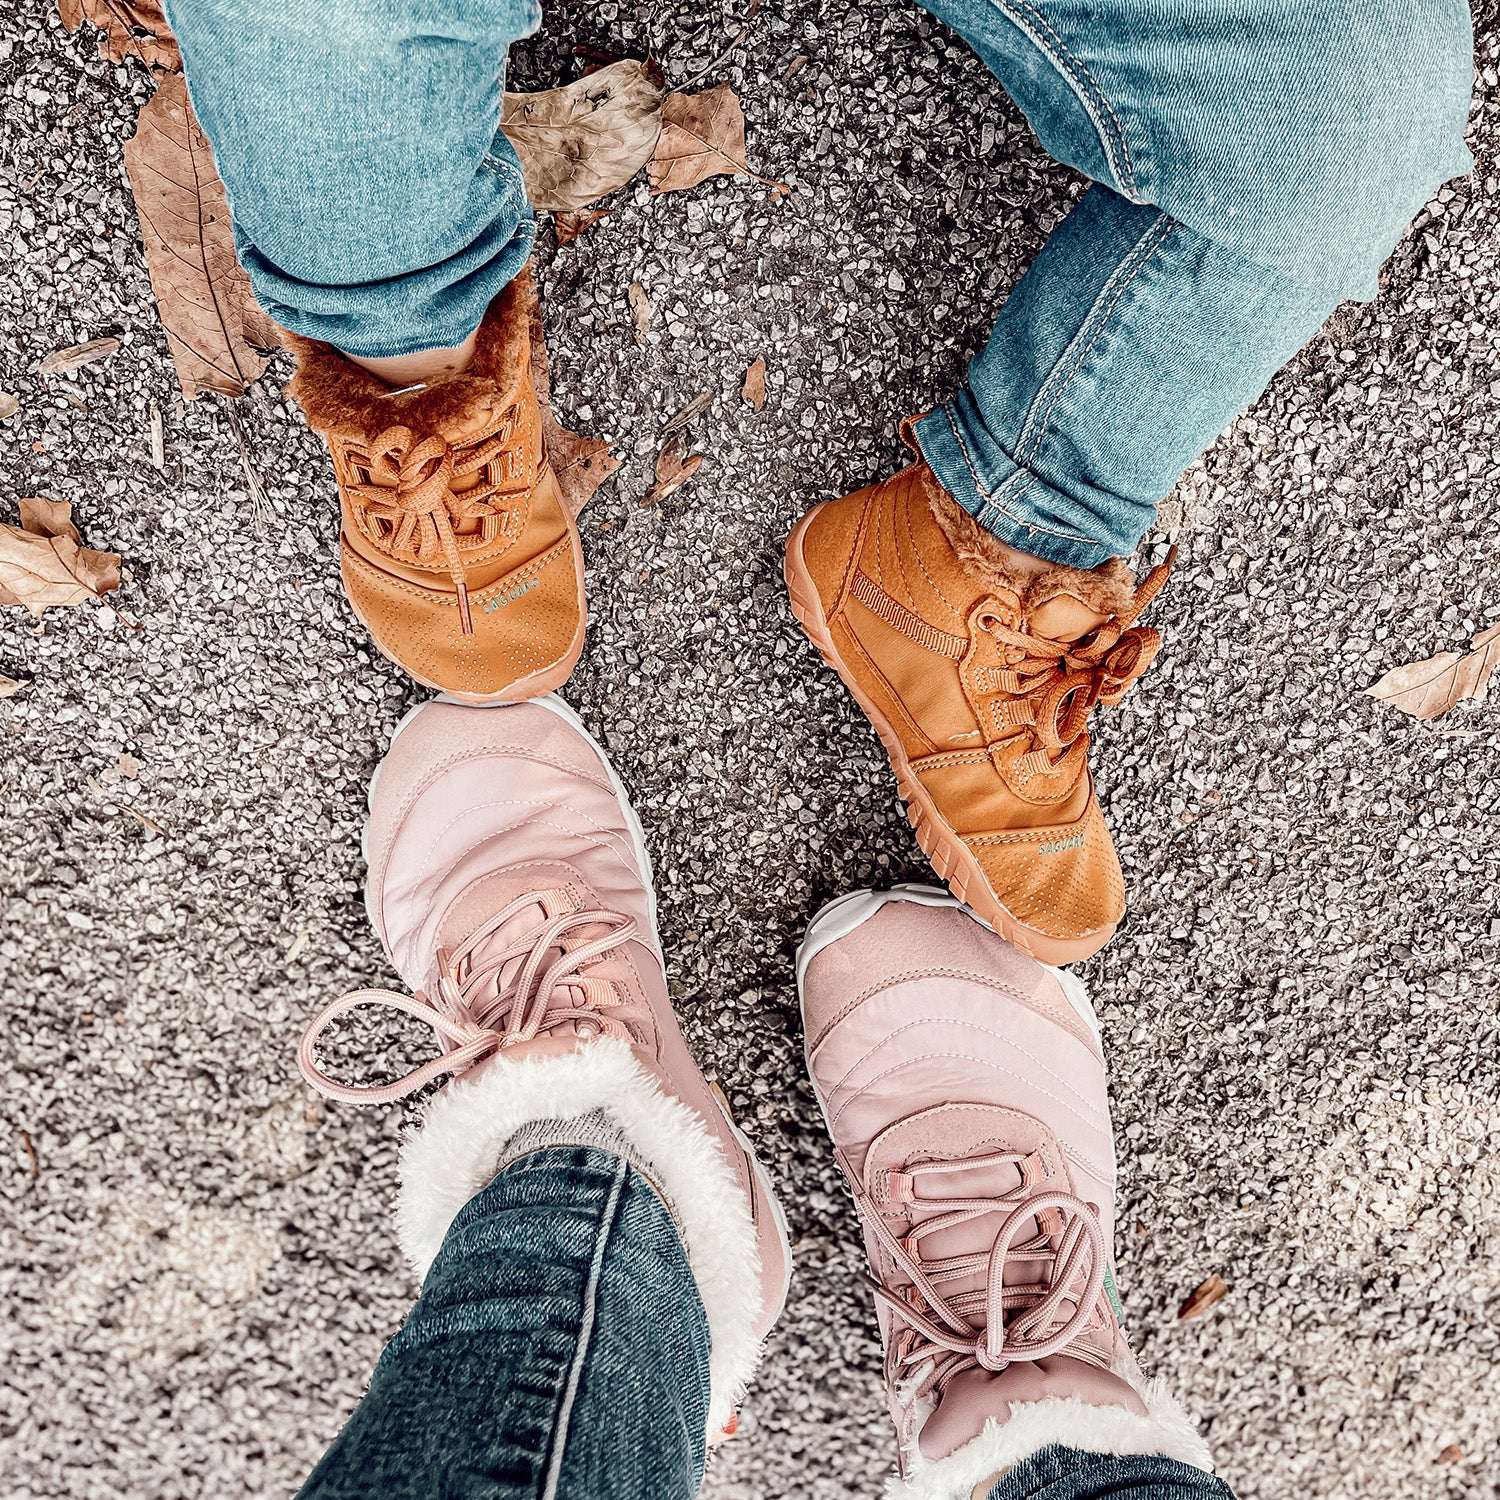 Saguaro Shoes Chile on Instagram: SAGUARO®️ Barefoot Shoes Chile 🌵👣🇨🇱  👣 ¡Libertad de movimiento para tus pequeños con las SAGUARO®️ Kids Smart  I! 👶 ✨ Zapatillas ergonómicas estilo Barefoot, diseñadas para que